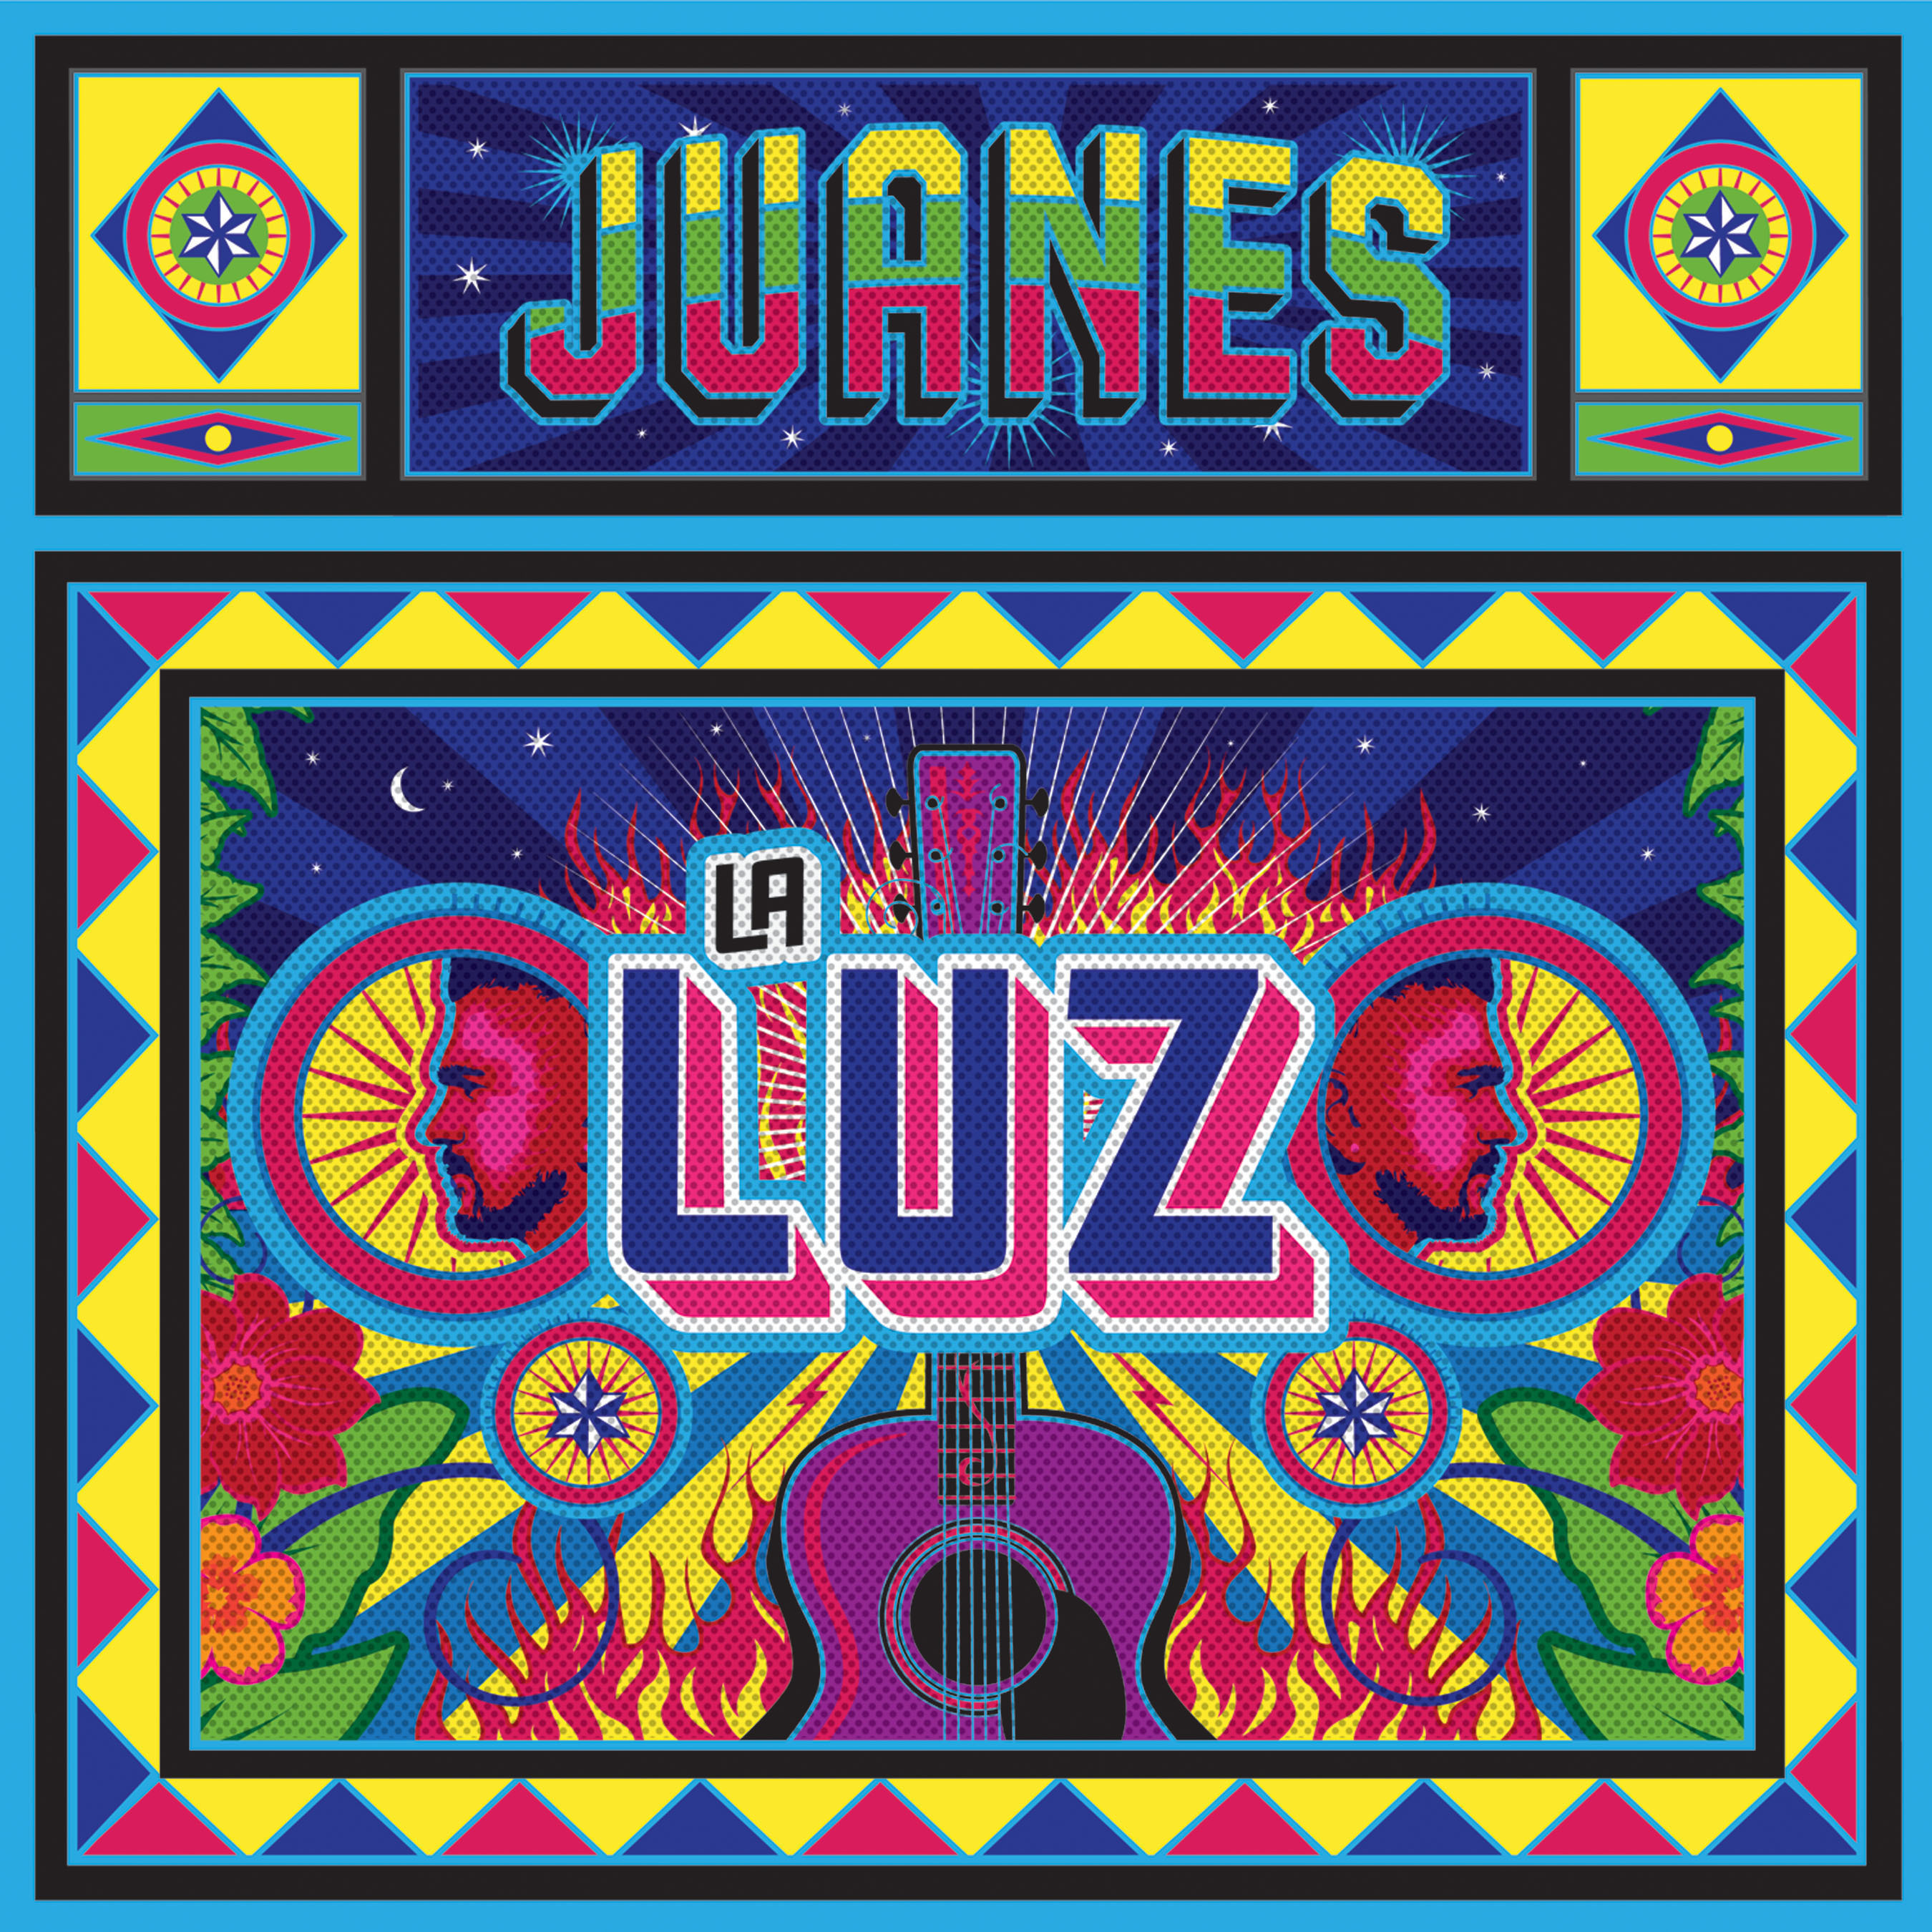 New Juanes Single "La Luz" (the Light) Is Globally Released Today. (PRNewsFoto/Universal Music Latin Entertainment) (PRNewsFoto/UNIVERSAL MUSIC LATIN ENT_)